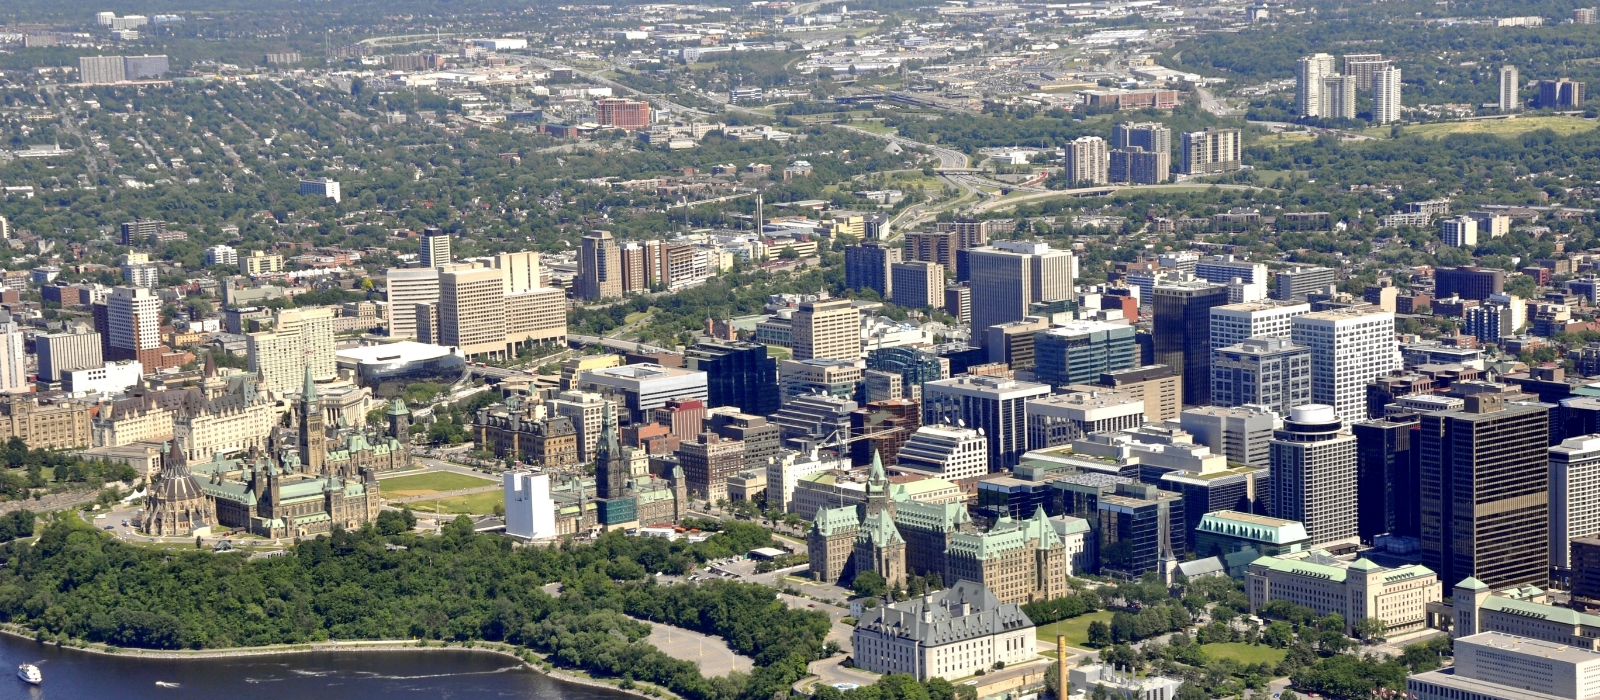 Image of the City of Ottawa